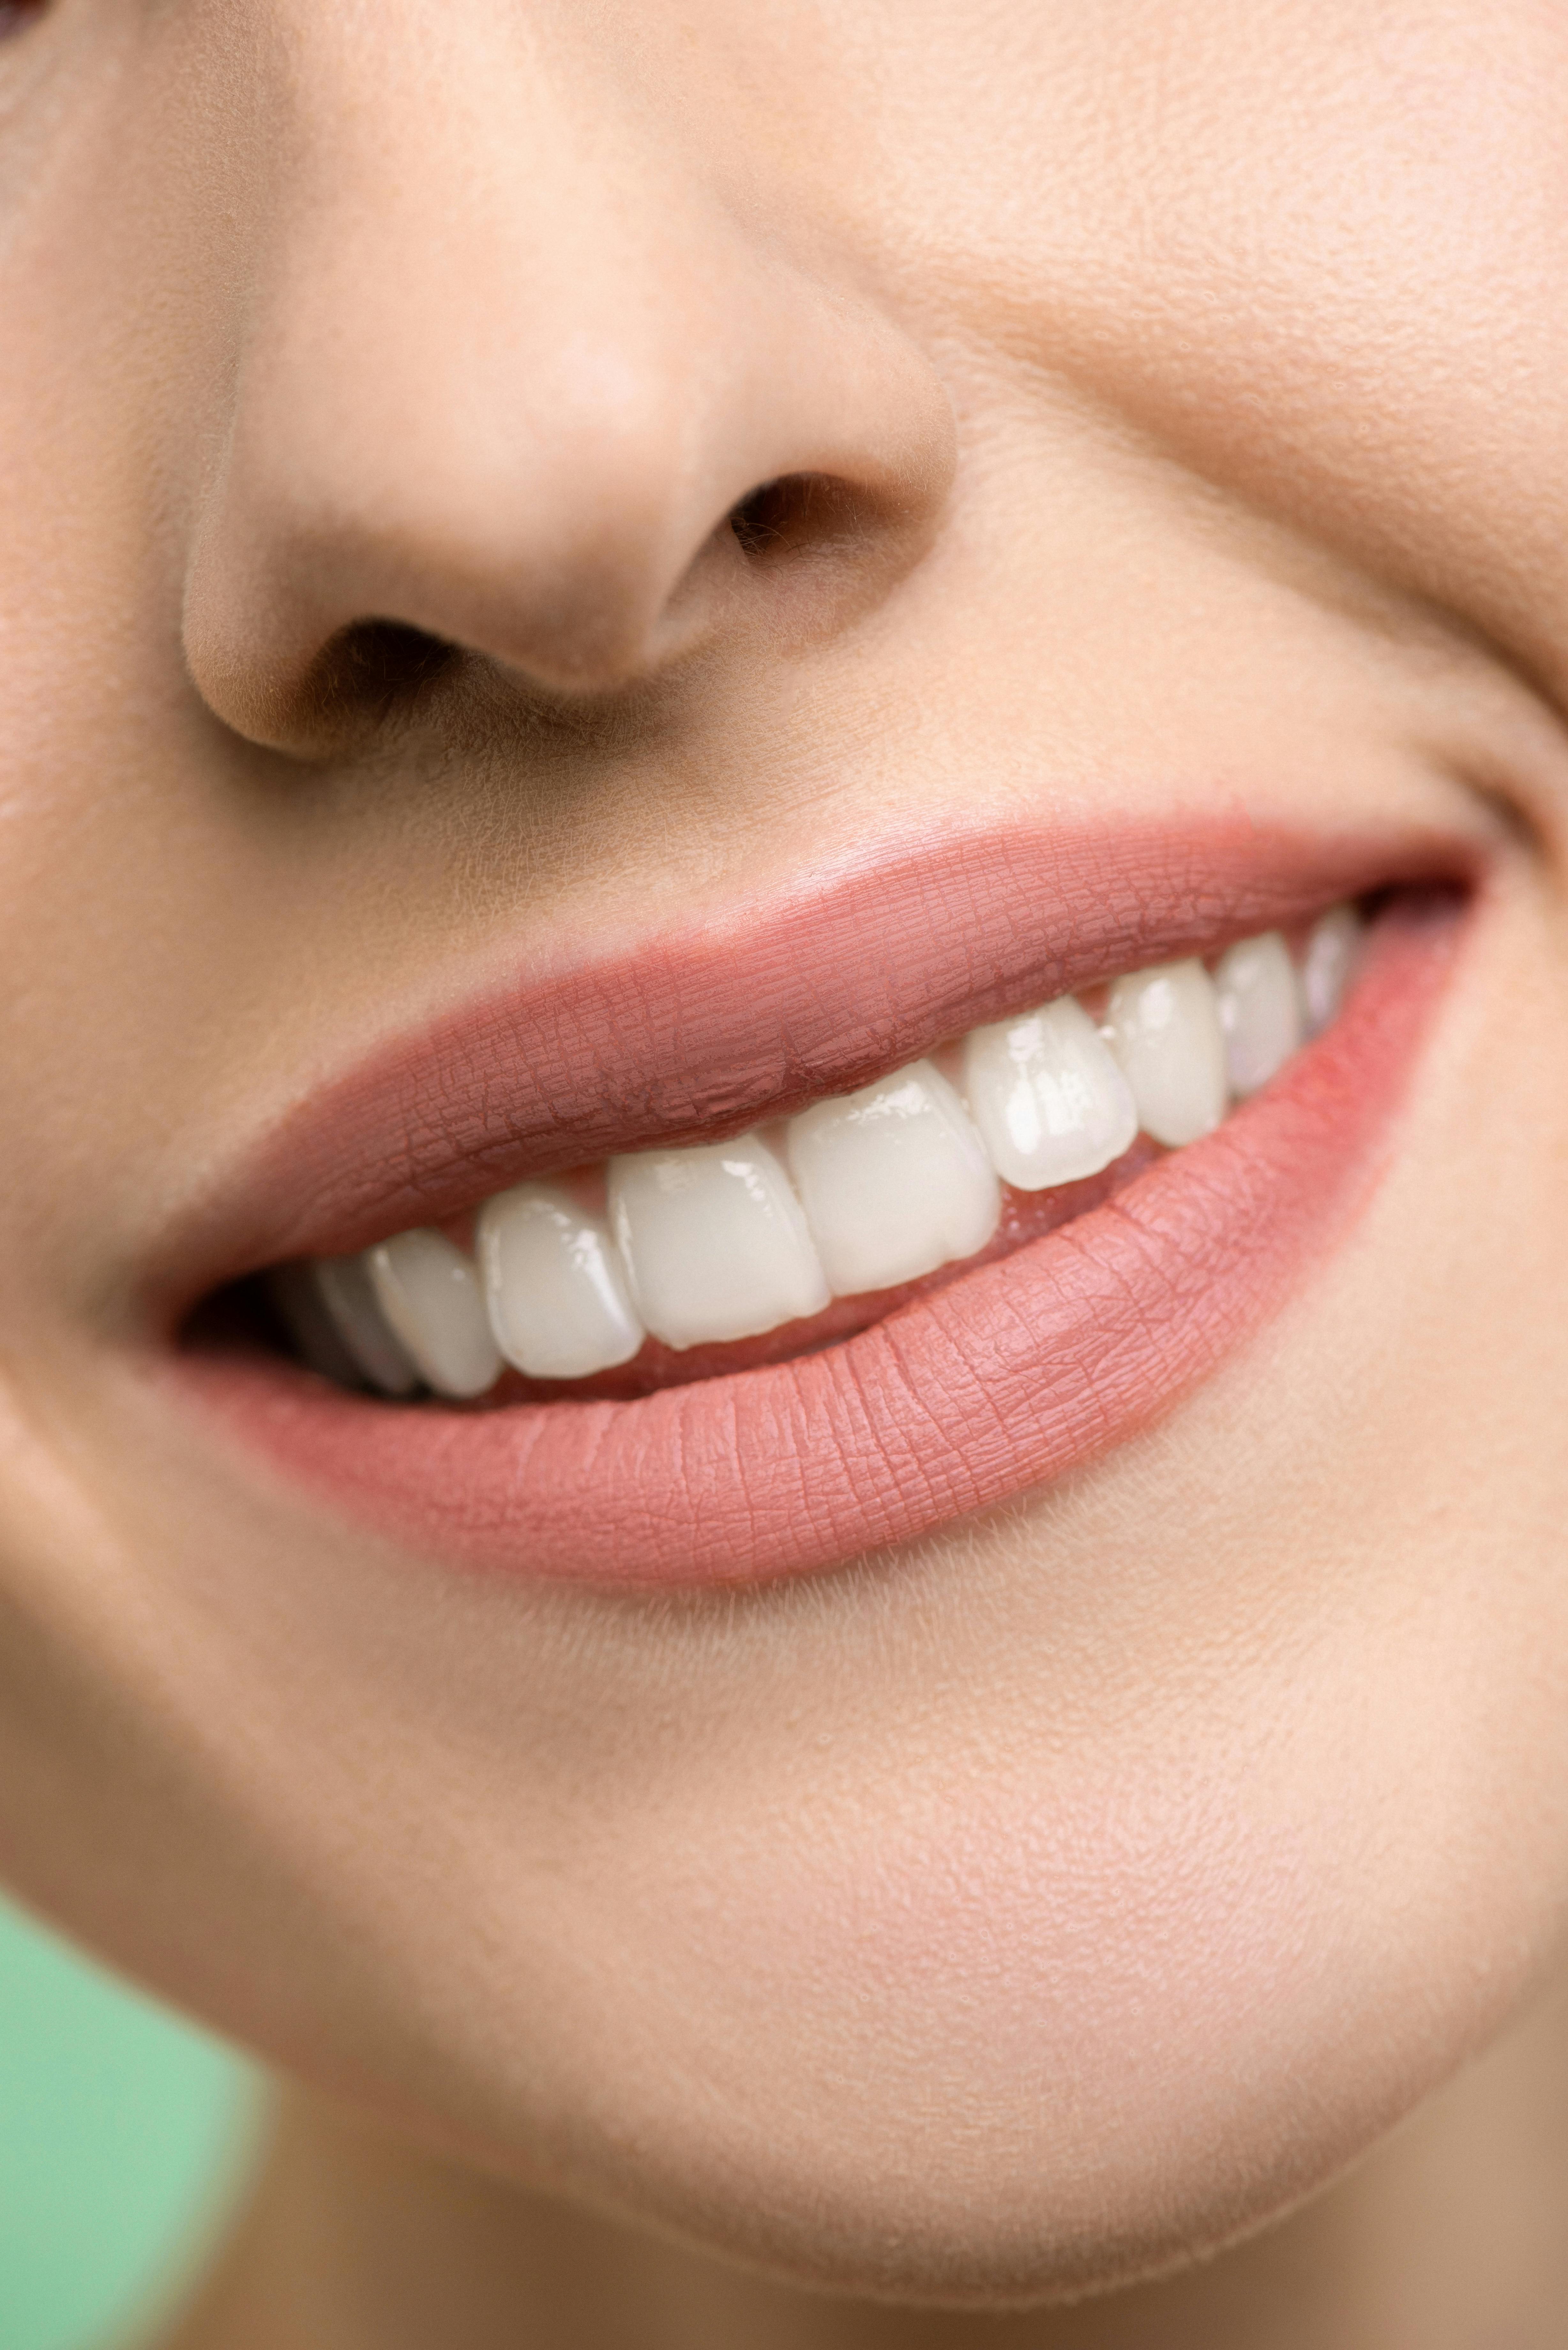 teeth whitening for sensitive teeth